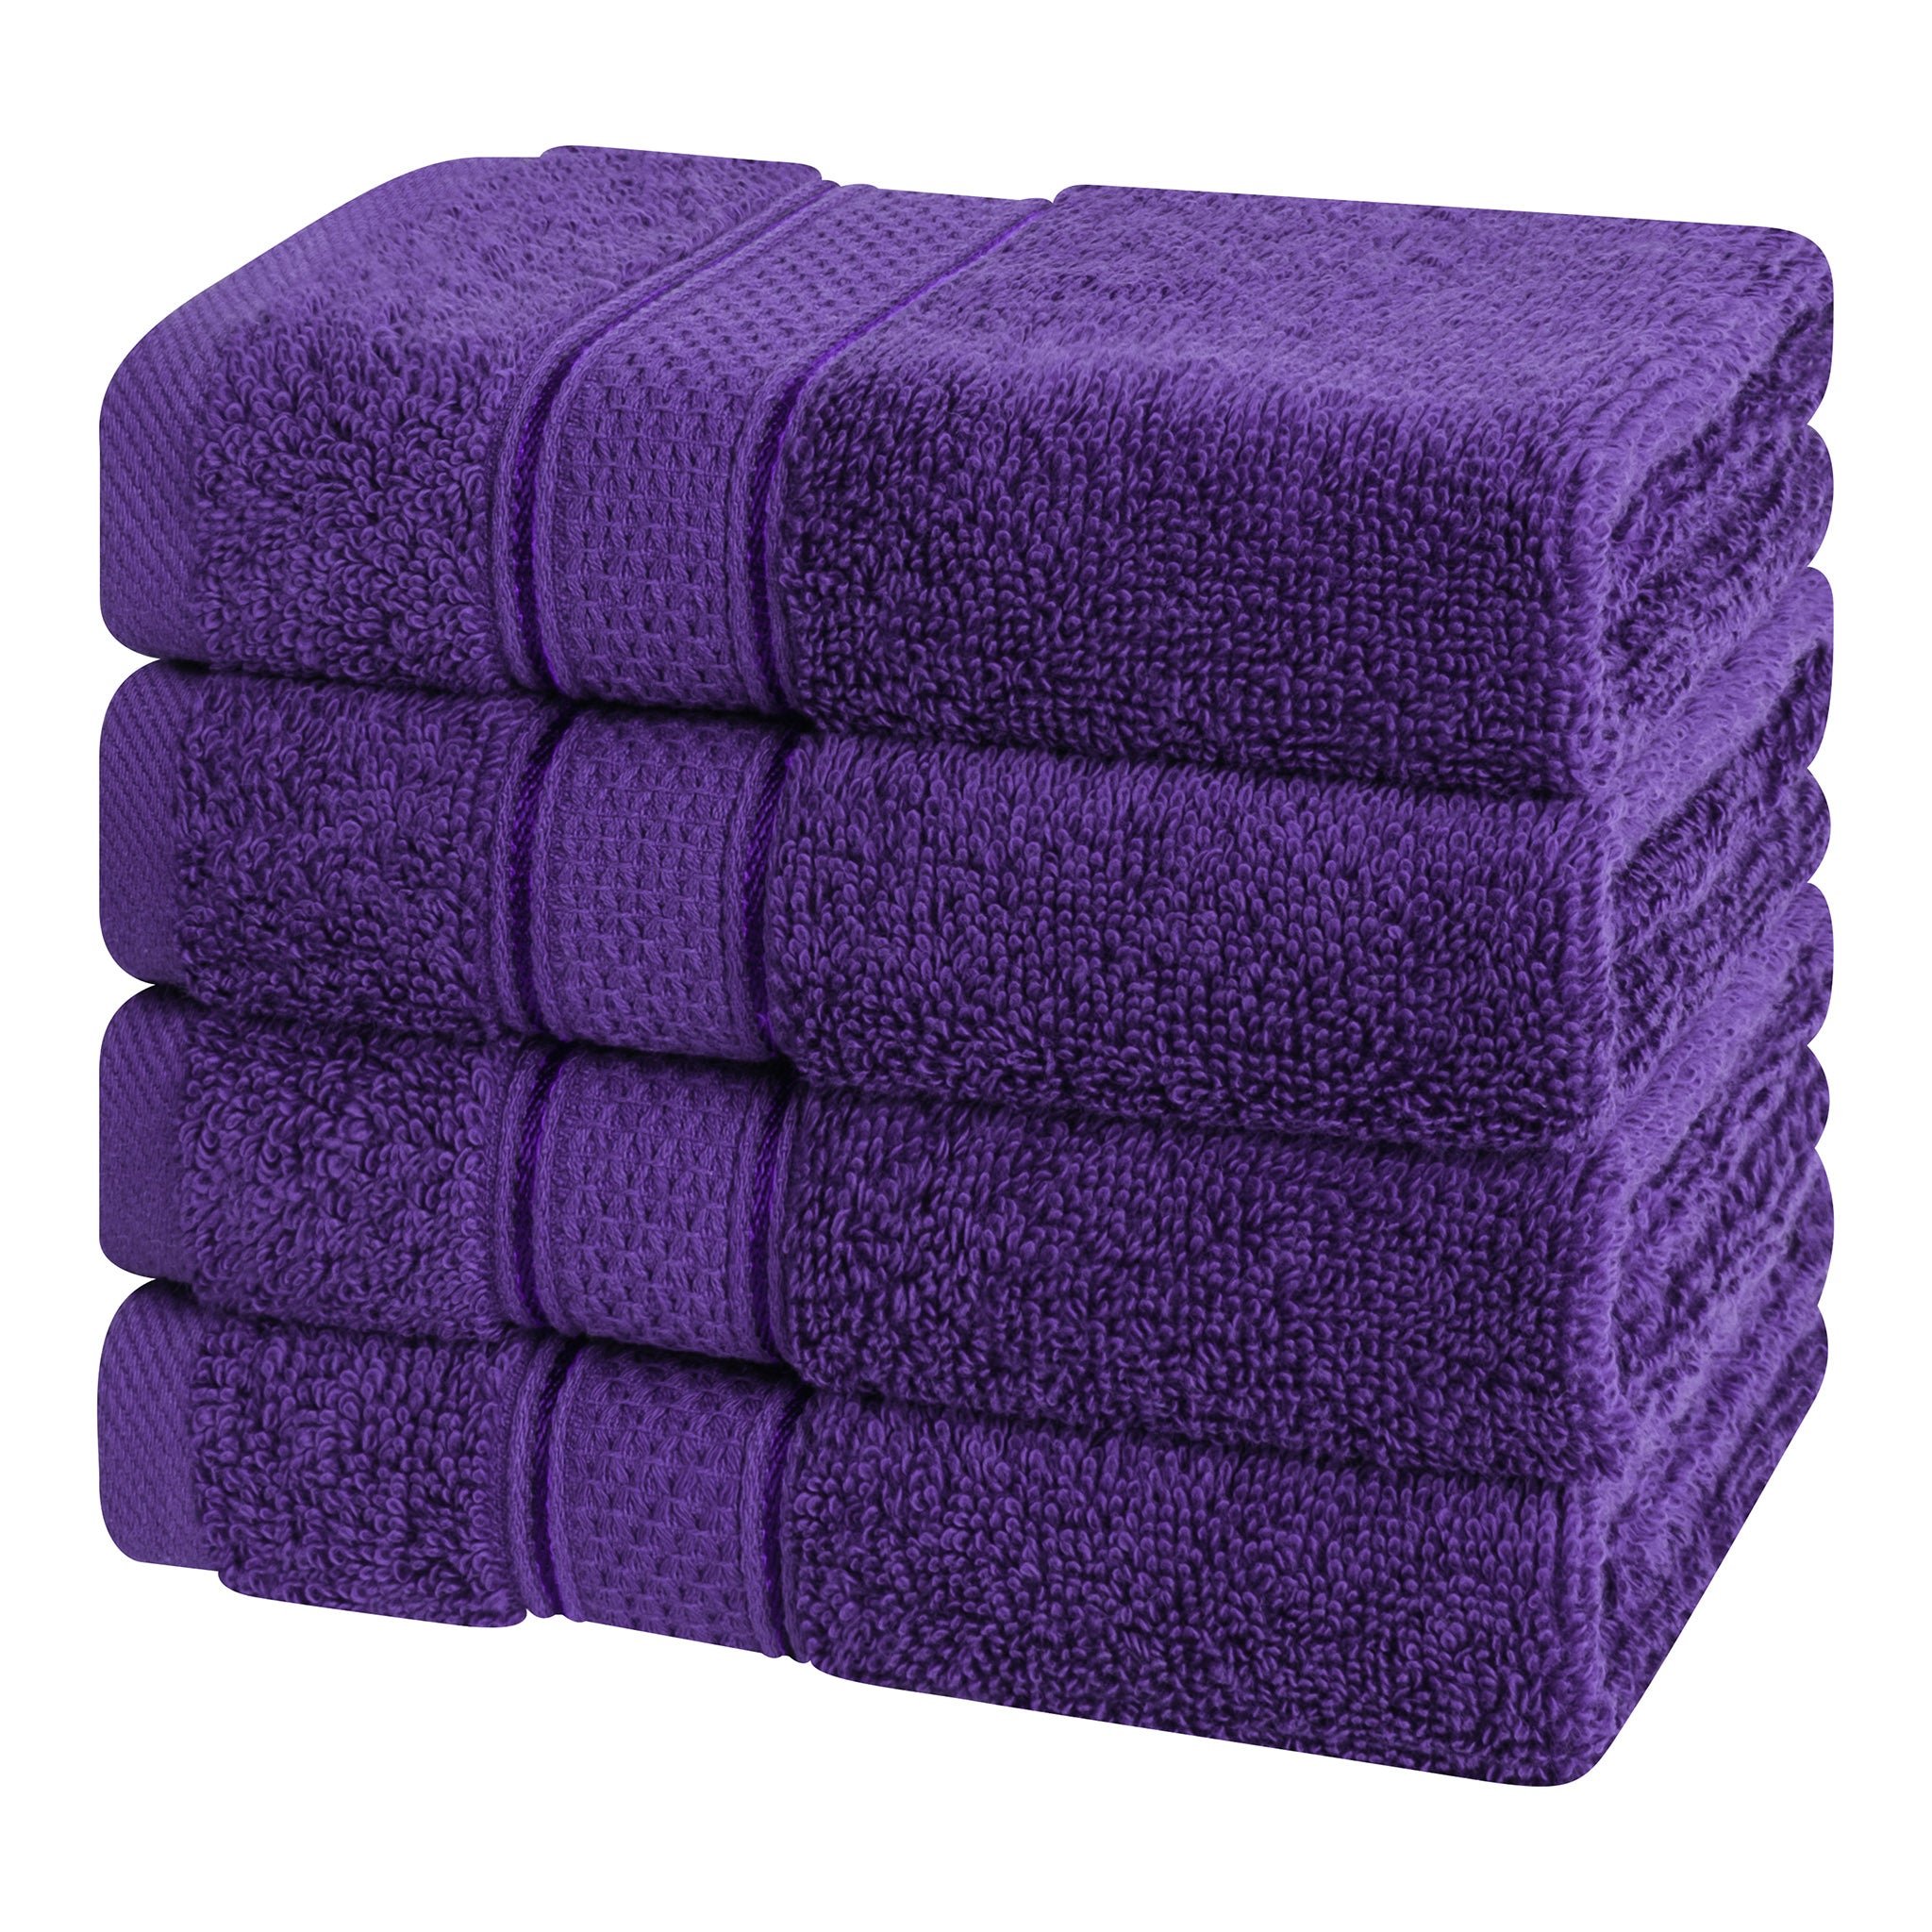 American Soft Linen 6 Piece Towel Set, 100% Cotton Bath Towels for Bathroom,  Purple in 2023